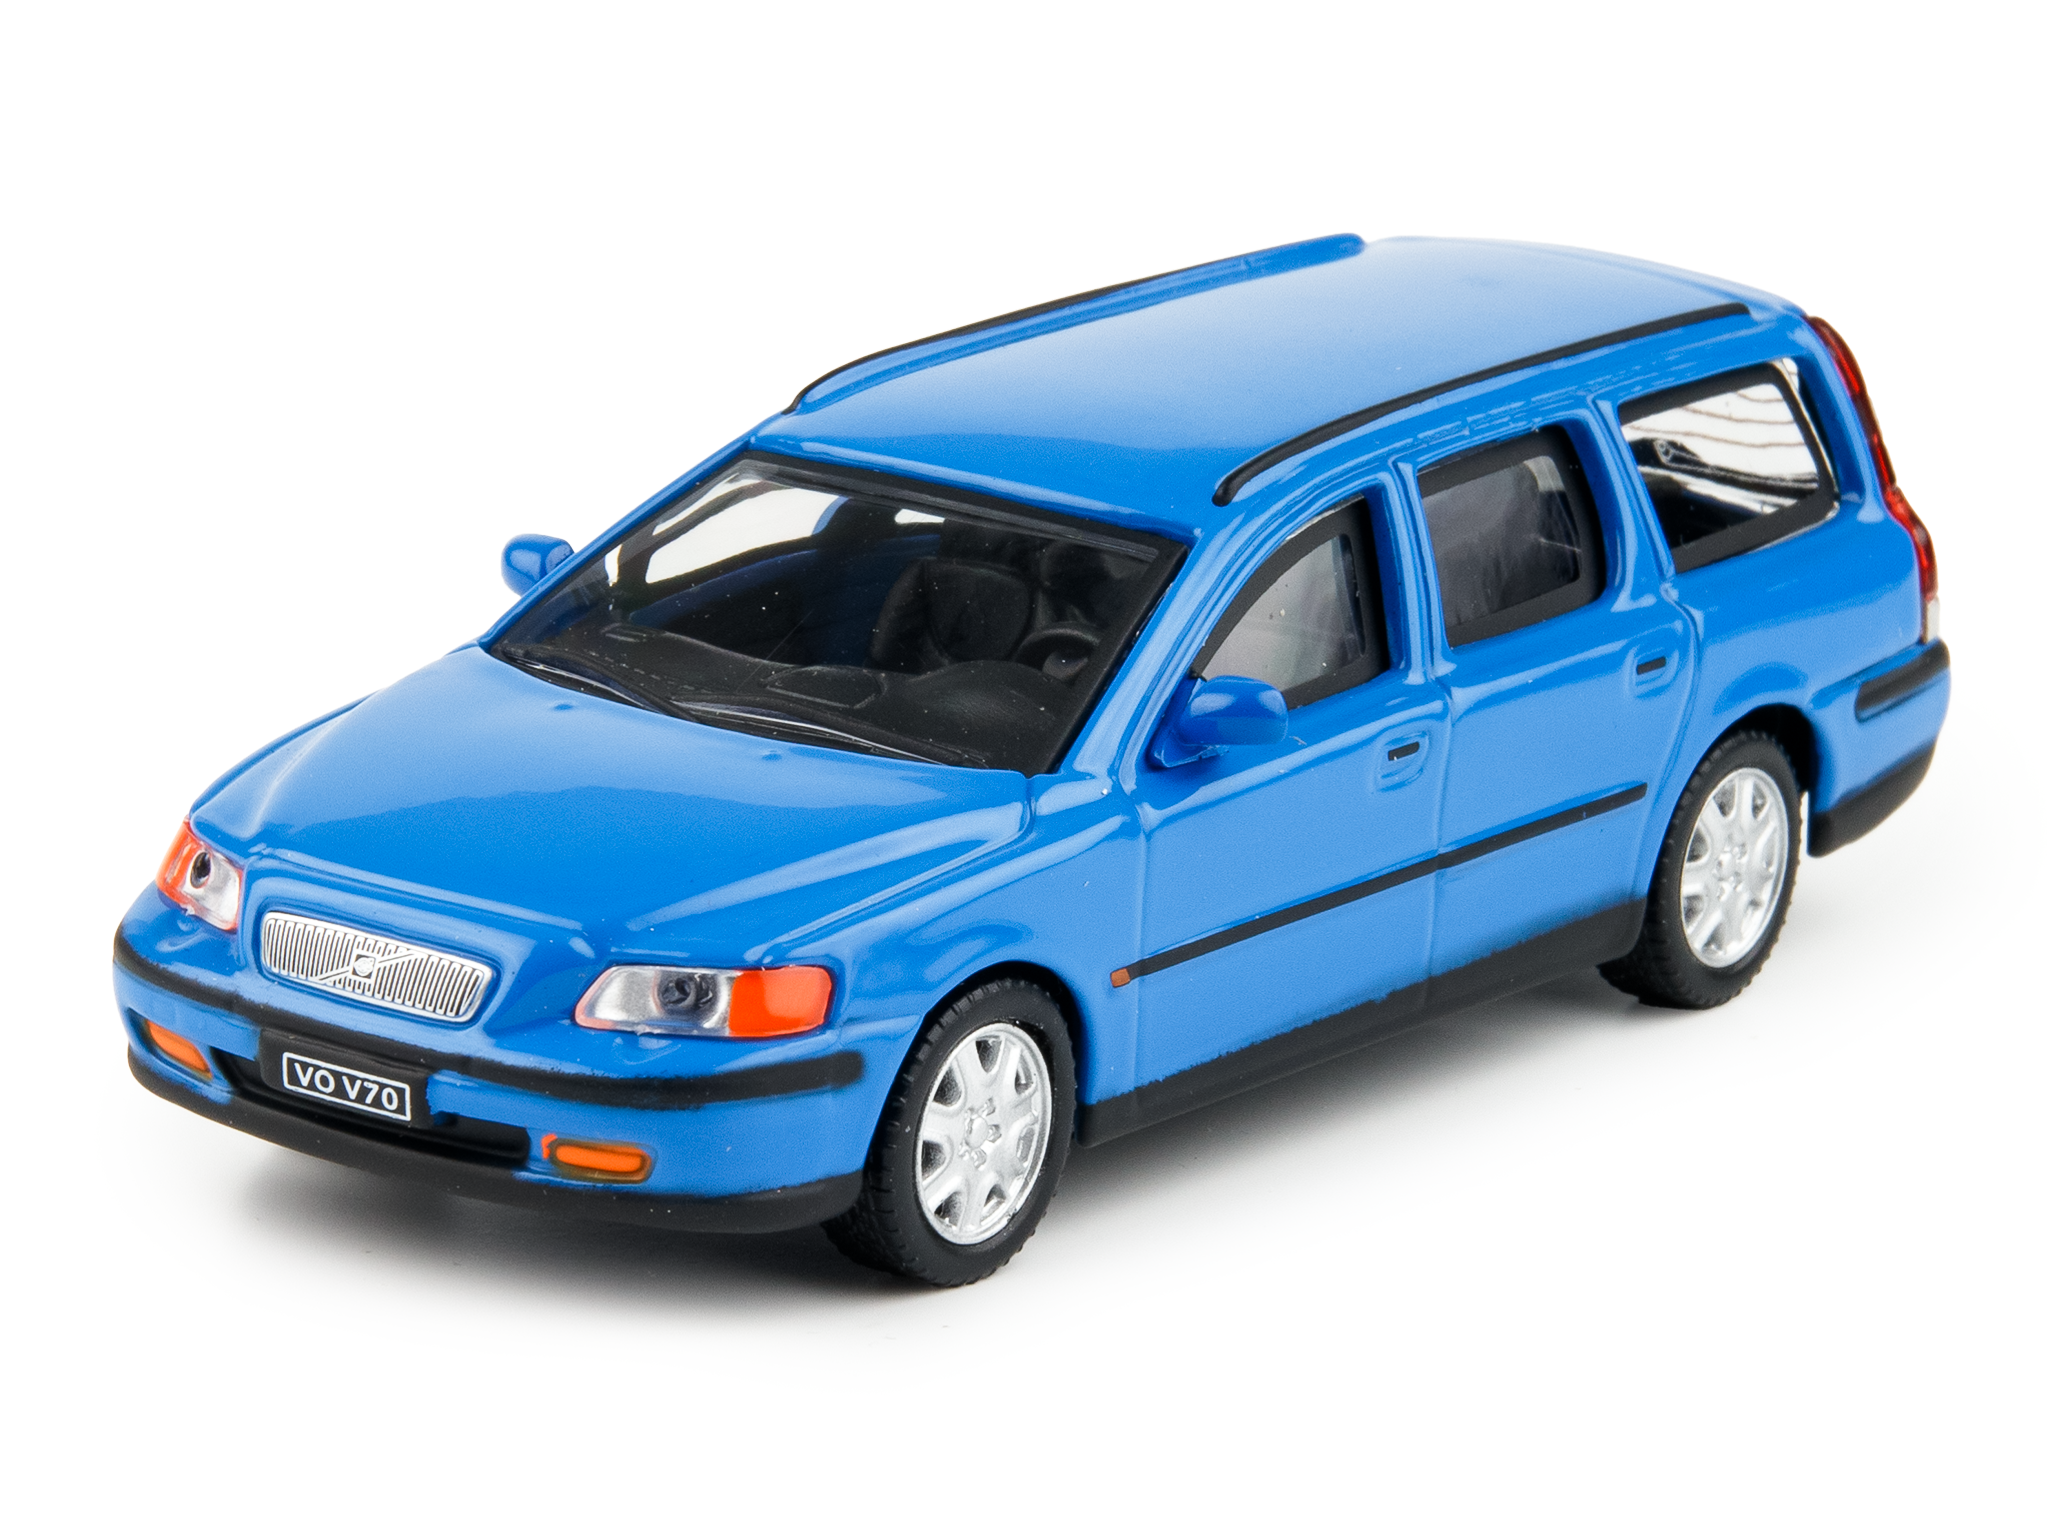 Volvo V70 2008 blue- 1:43 Scale Diecast Model Car